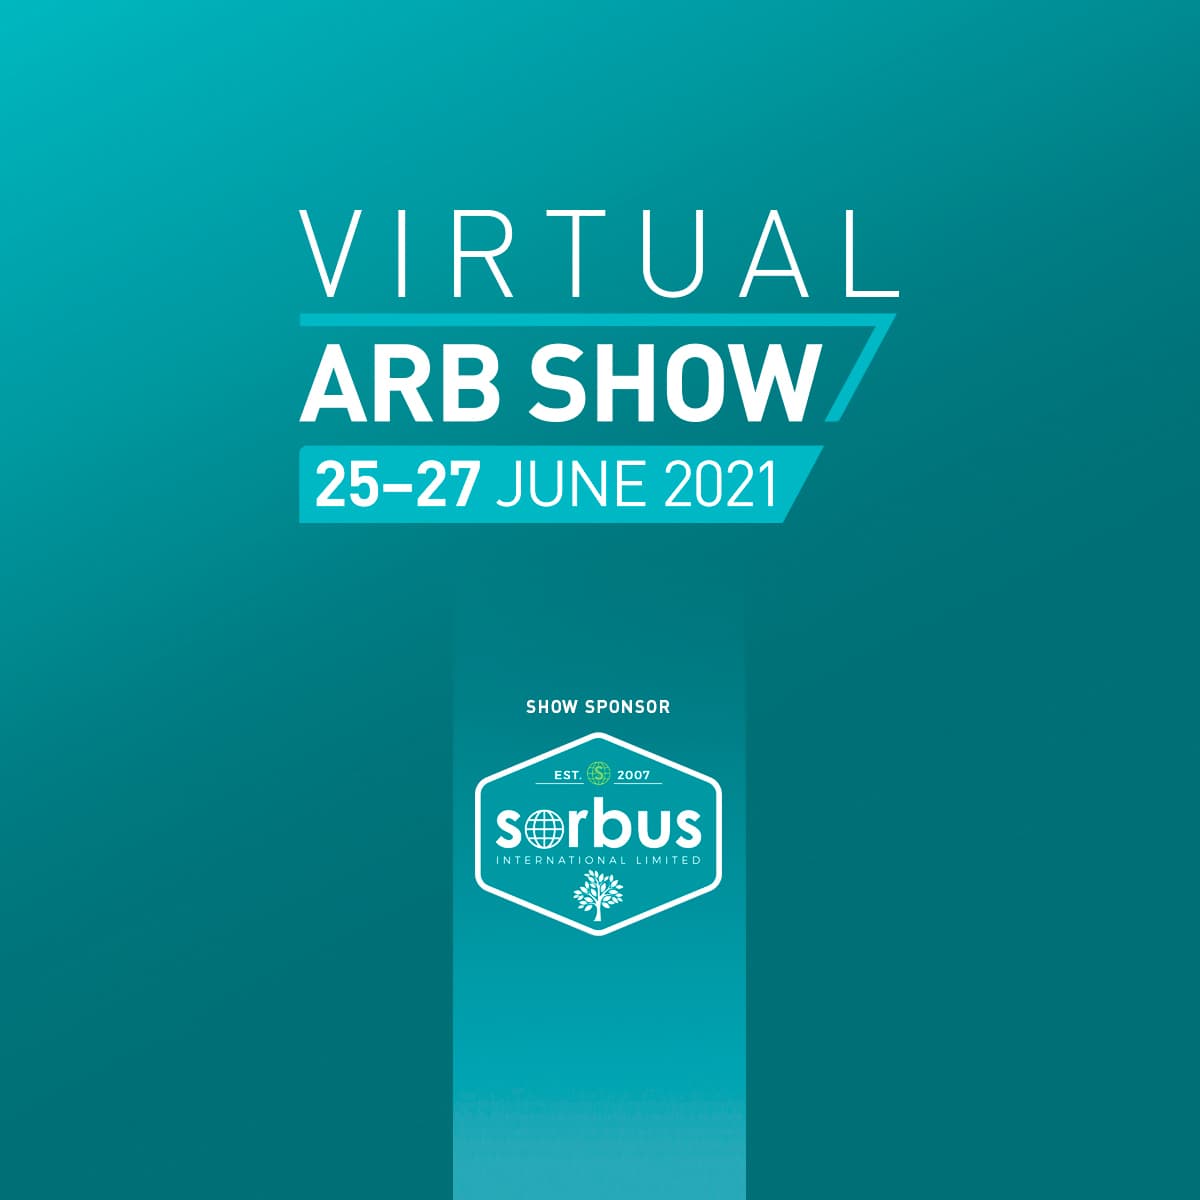 The Virtual ARB Show